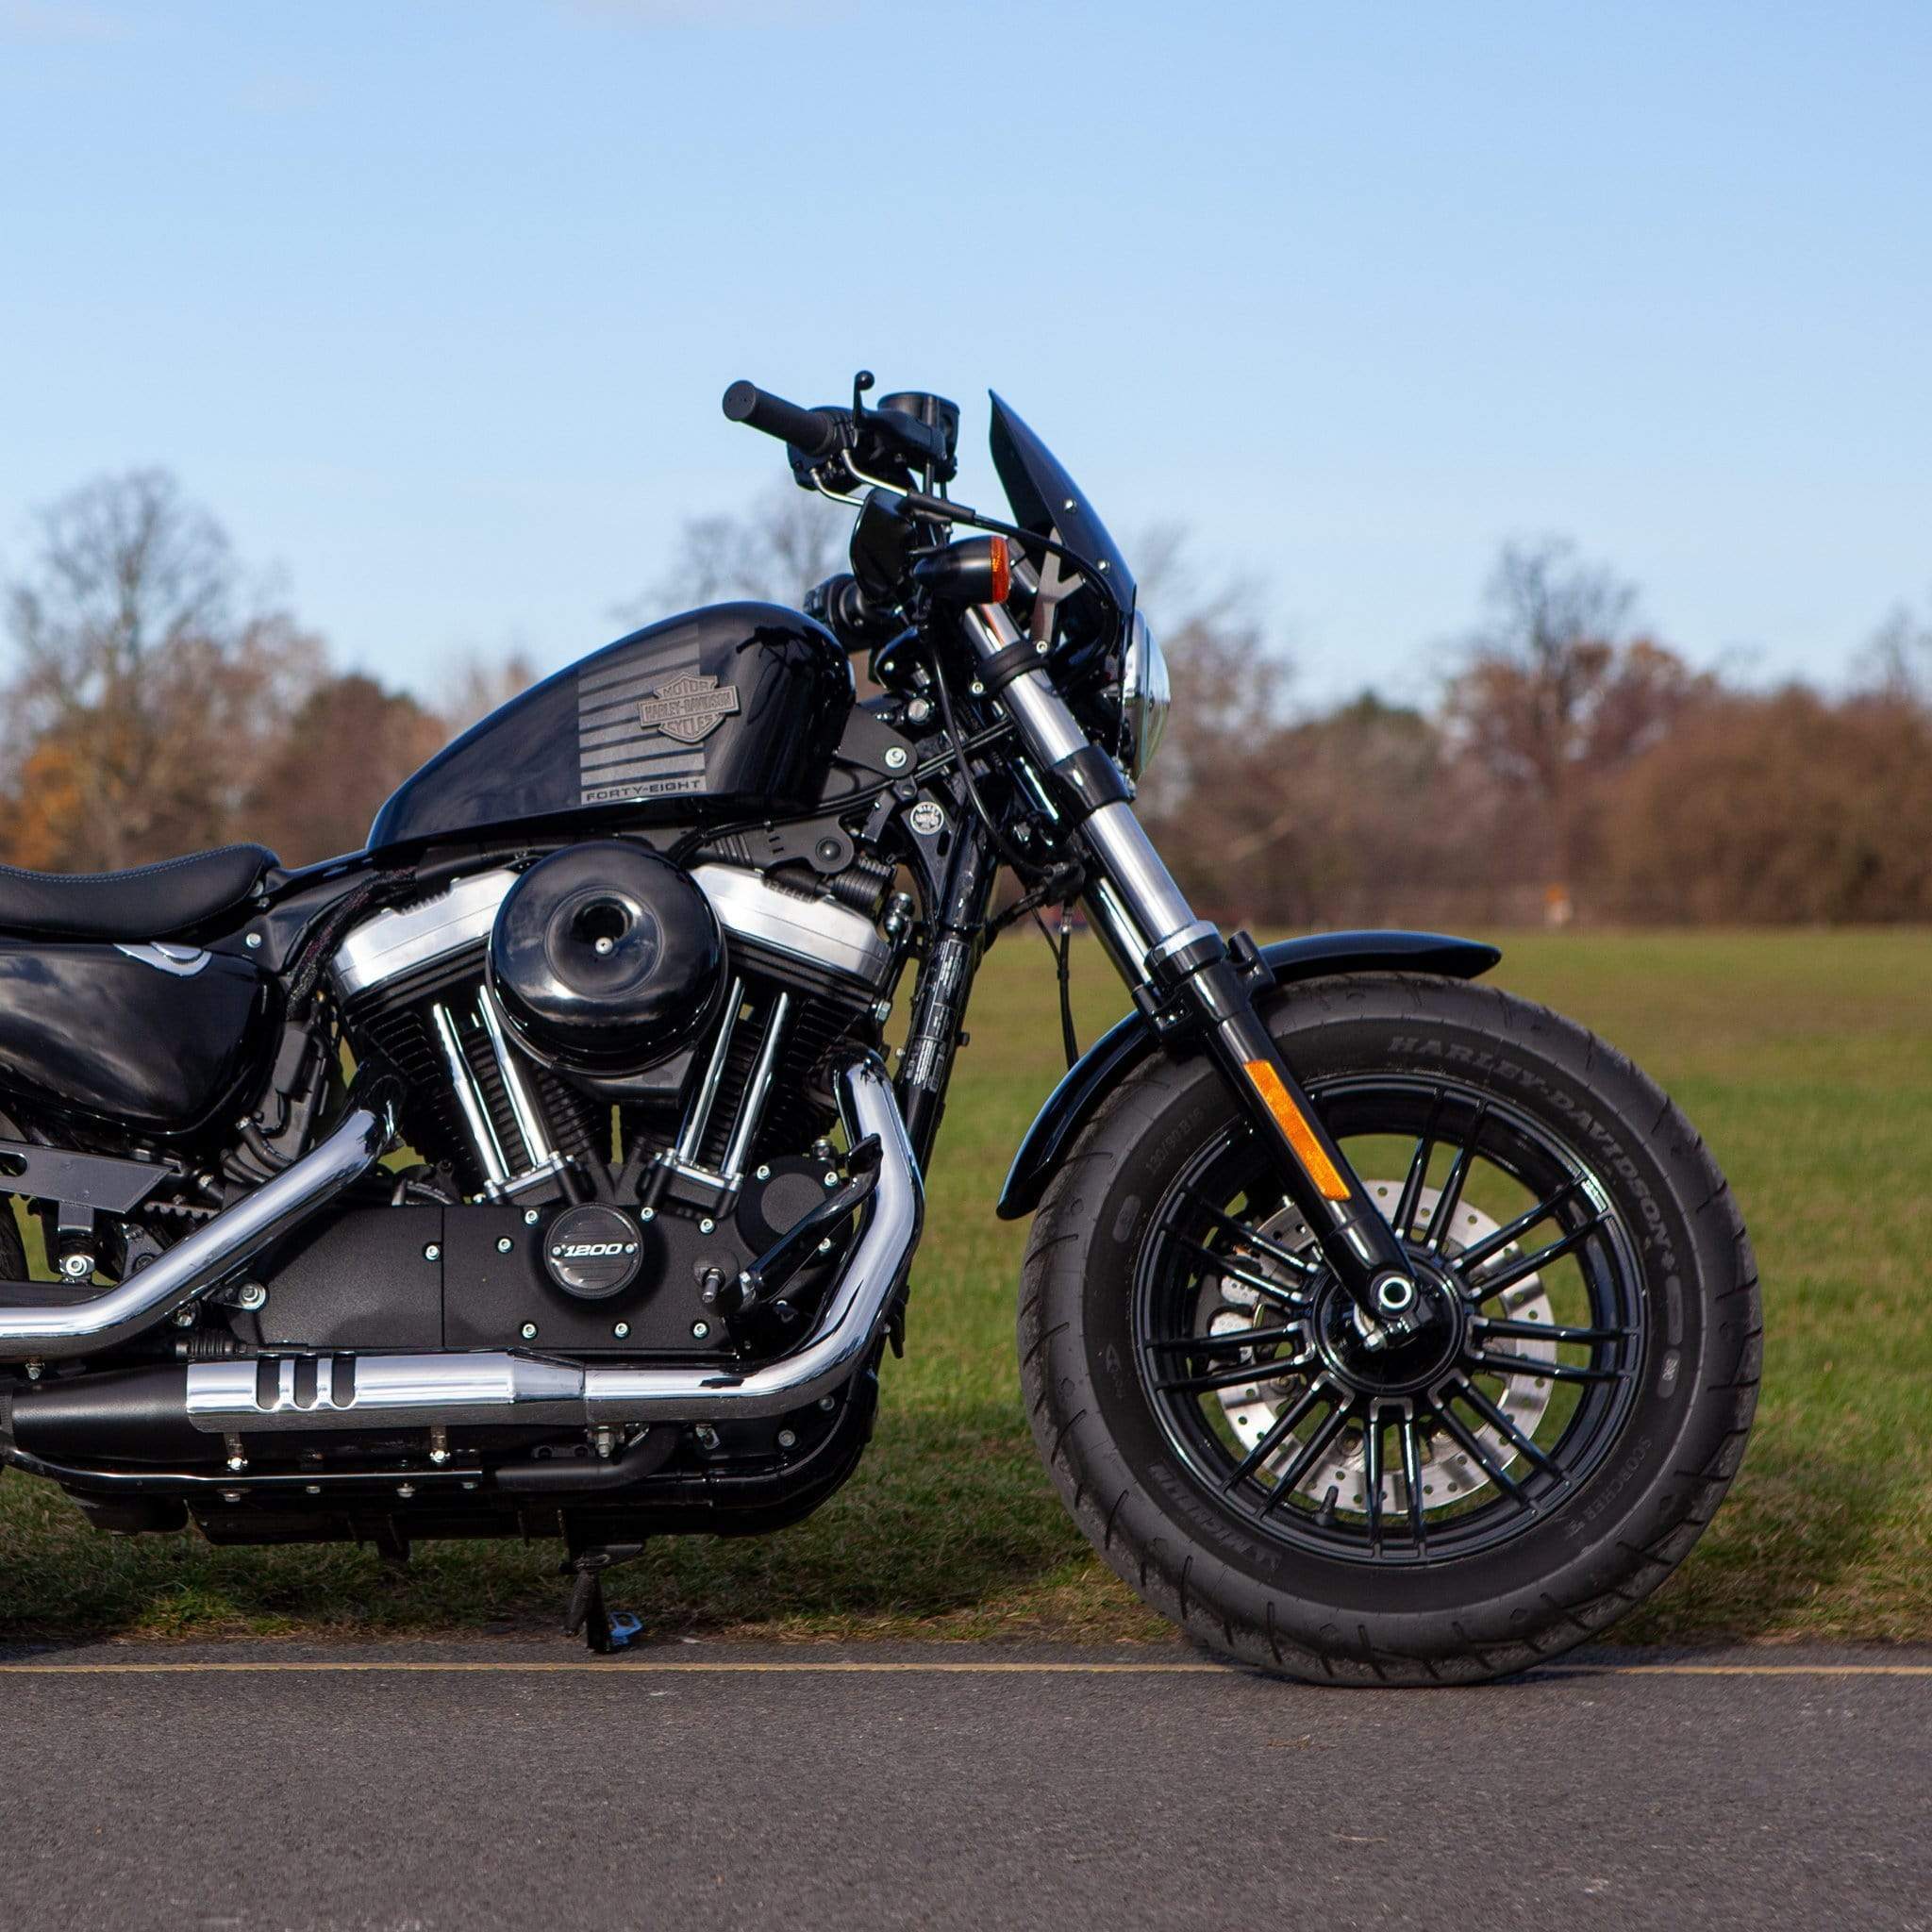  Harley Davidson Forty Eight Sportster Build Under 9mins  Bobber  Conversion  YouTube